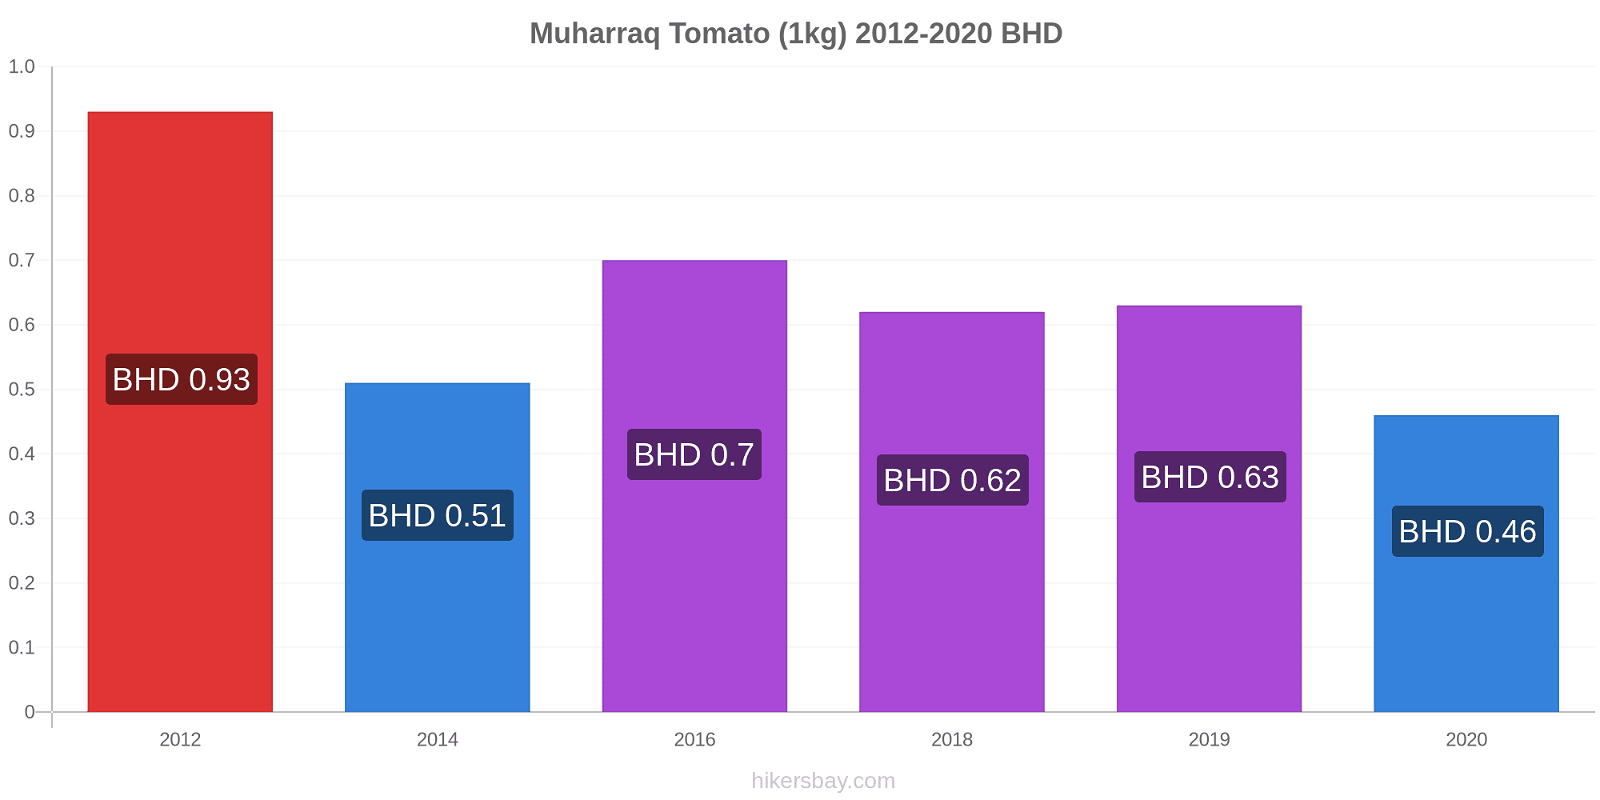 Muharraq price changes Tomato (1kg) hikersbay.com